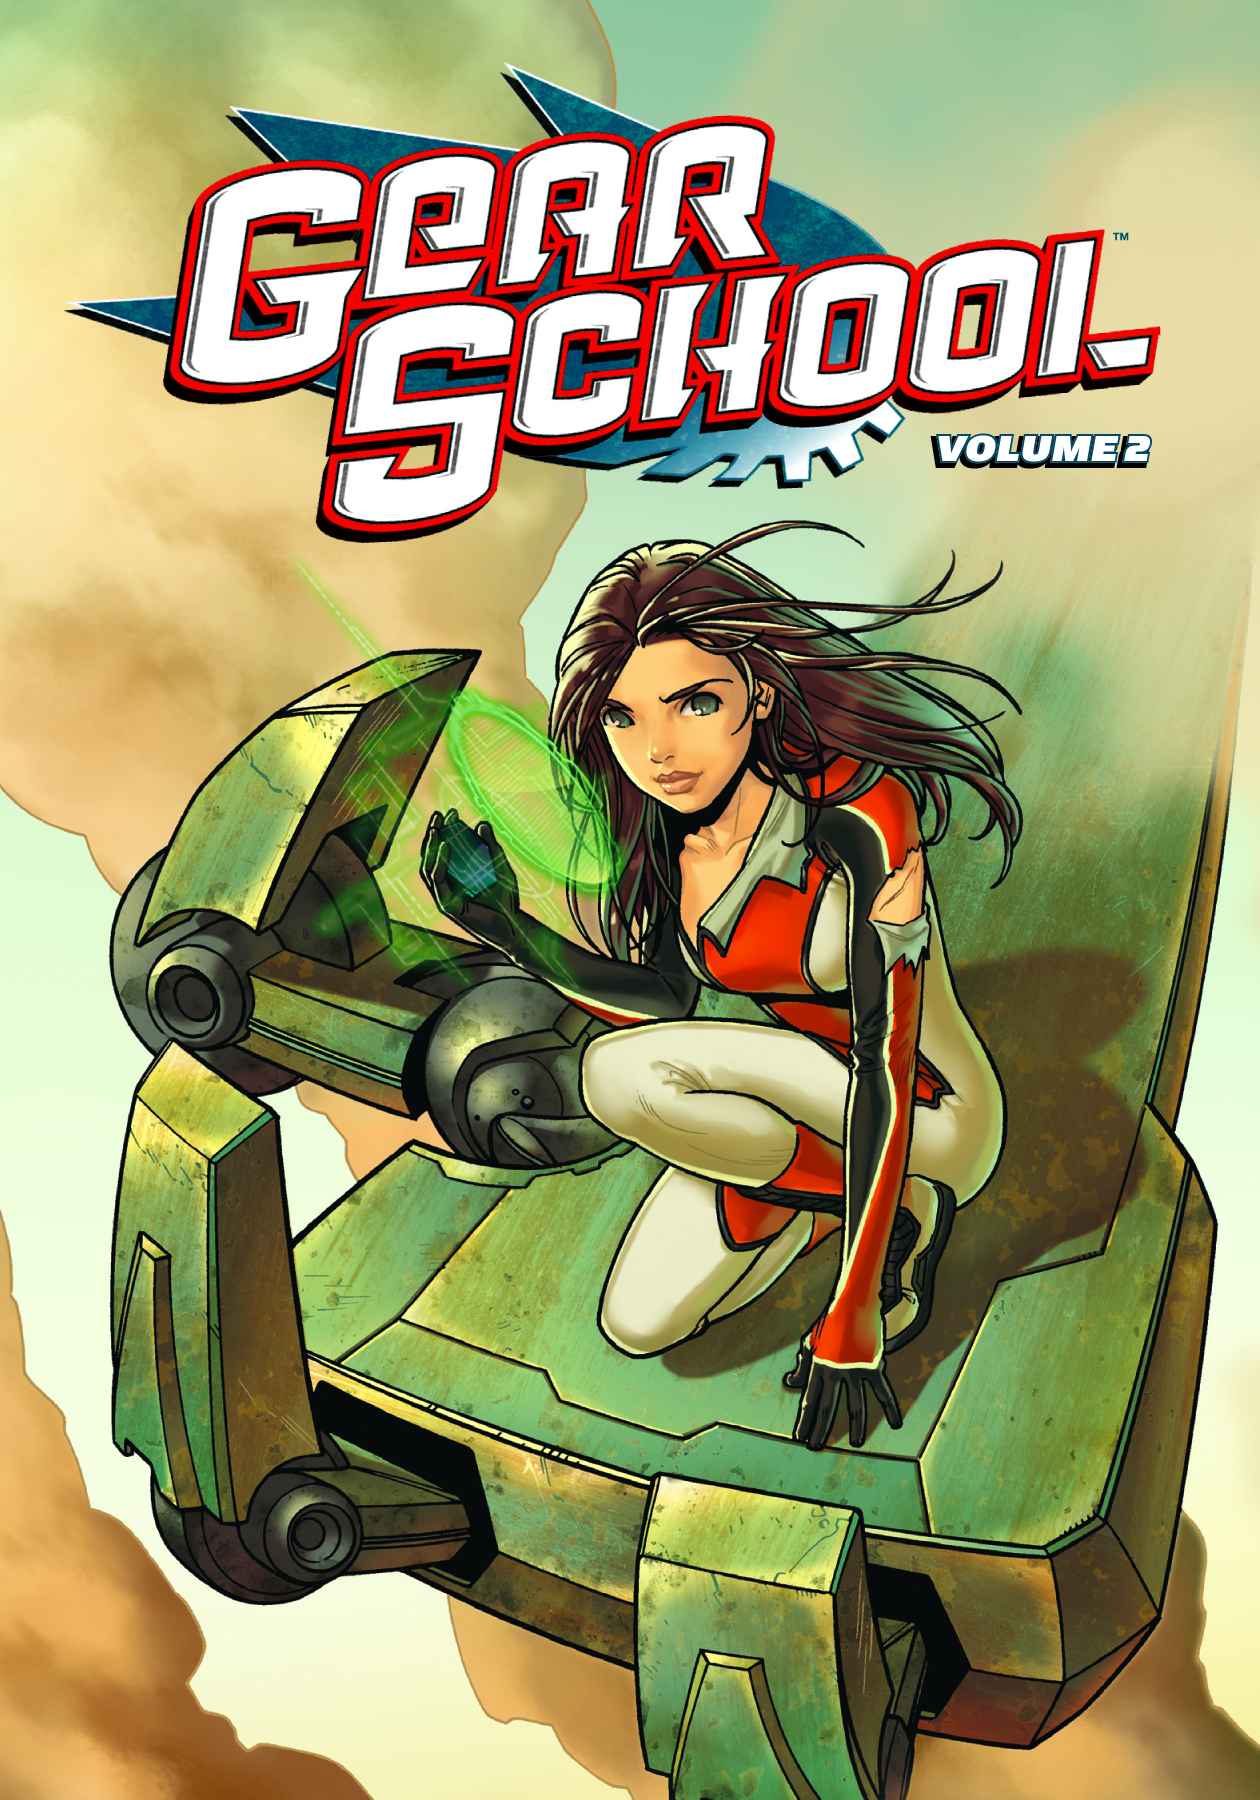 Gear School Graphic Novel Volume 2